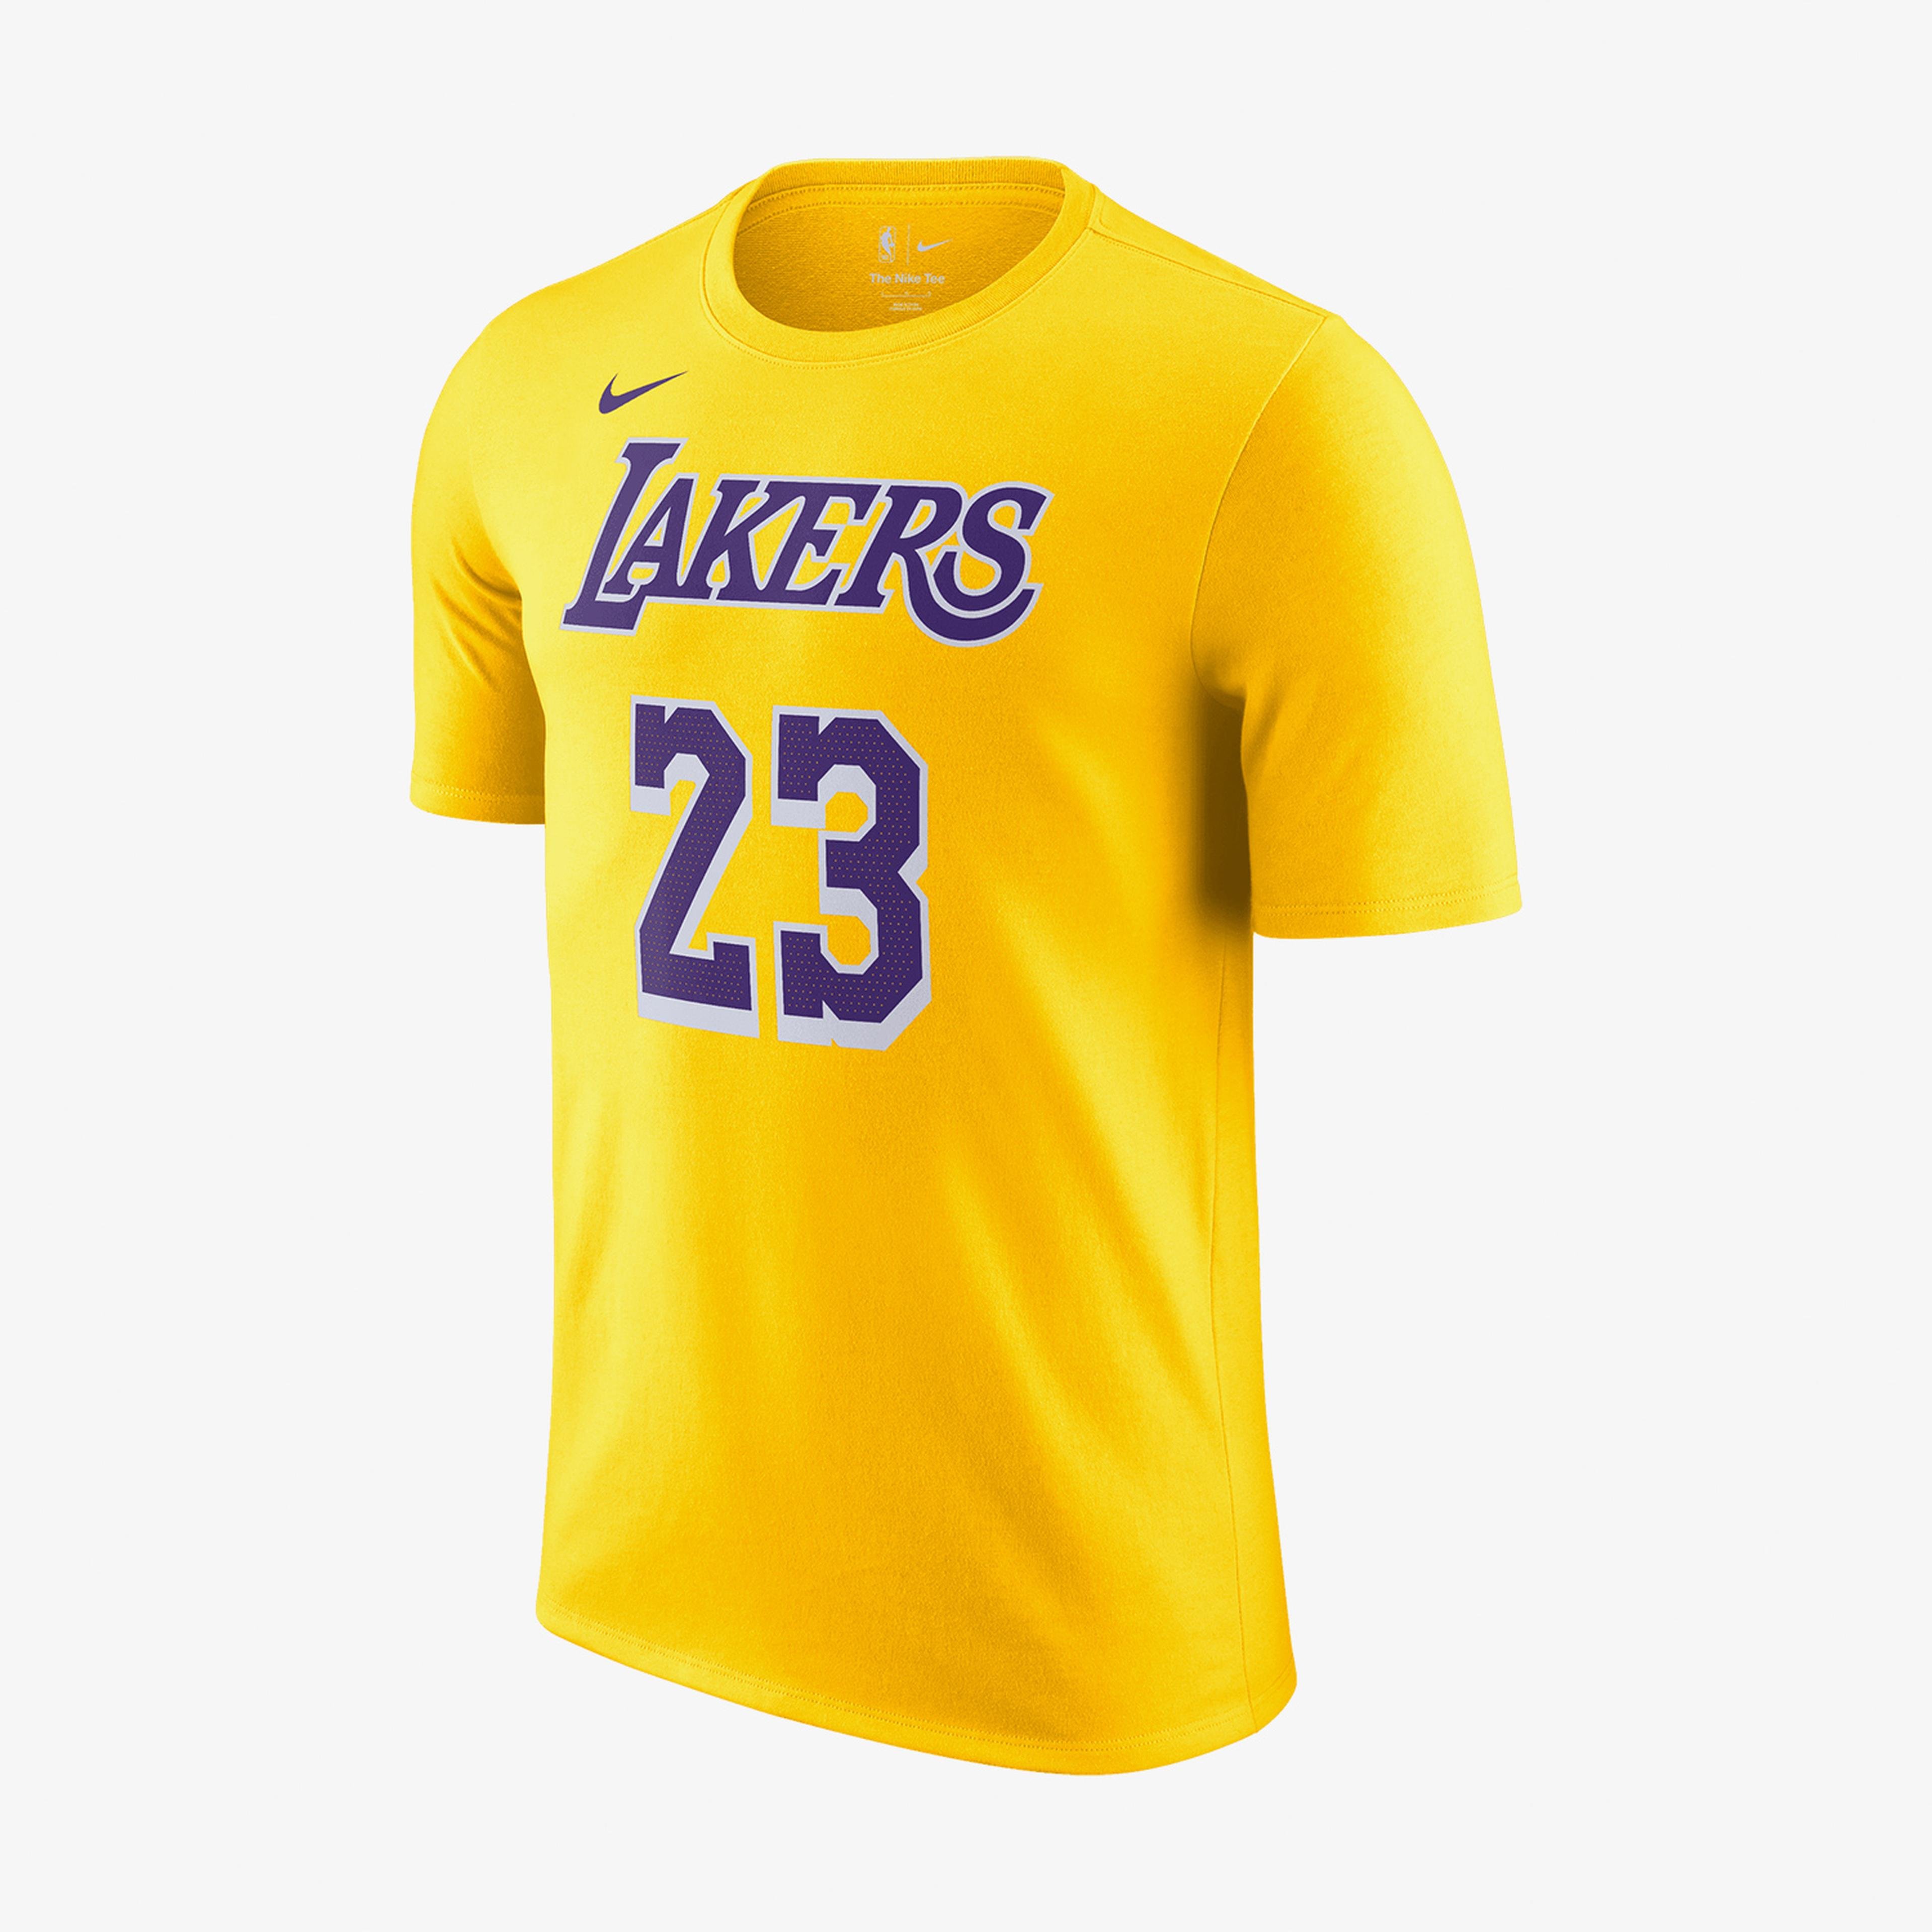 Nike LeBron James Los Angeles Lakers NBA Erkek Sarı/Altın T-Shirt